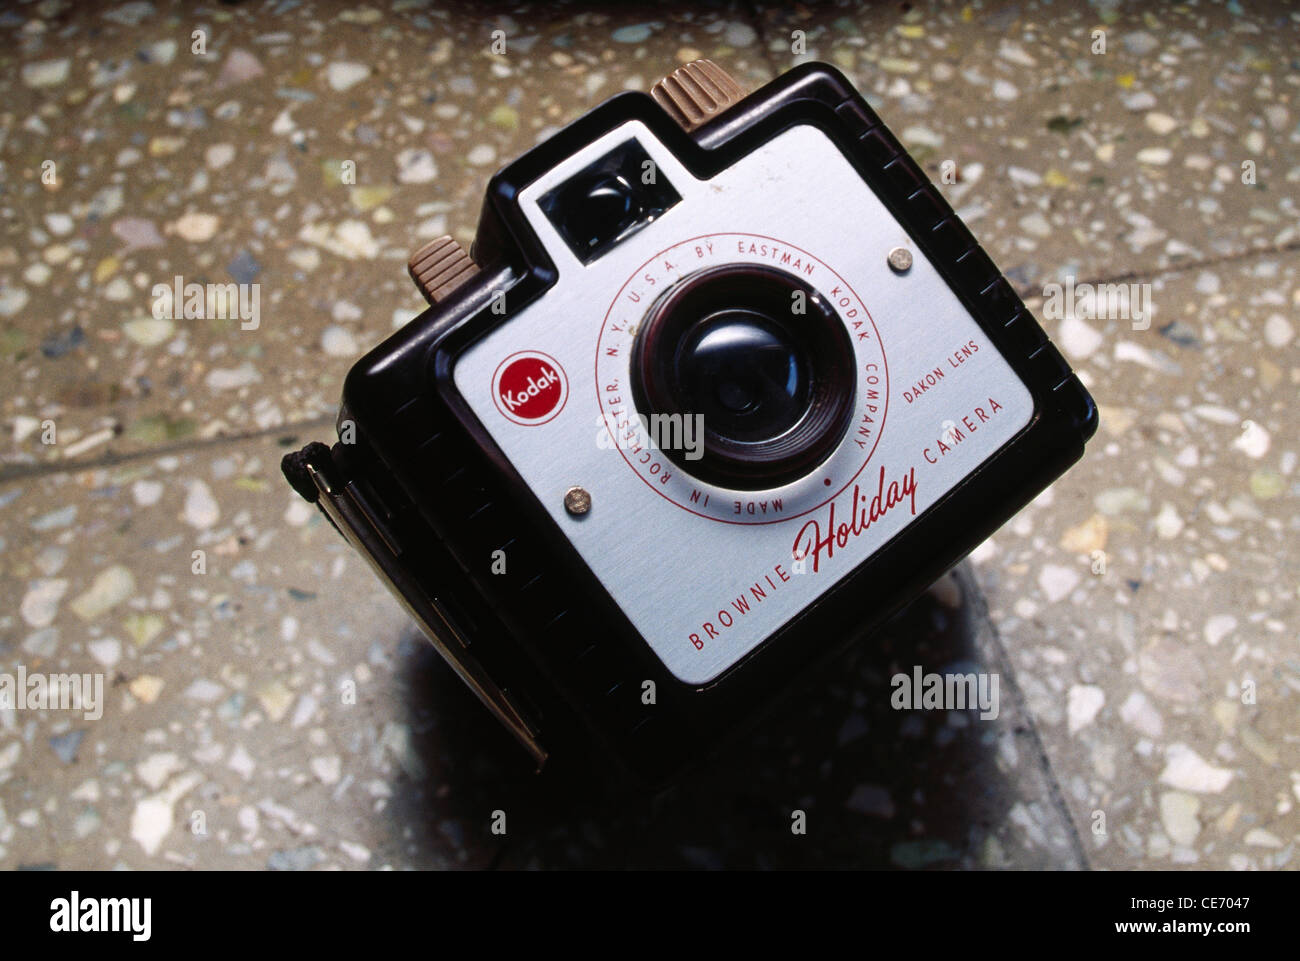 Eastman Kodak Stockfotos und -bilder Kaufen - Alamy